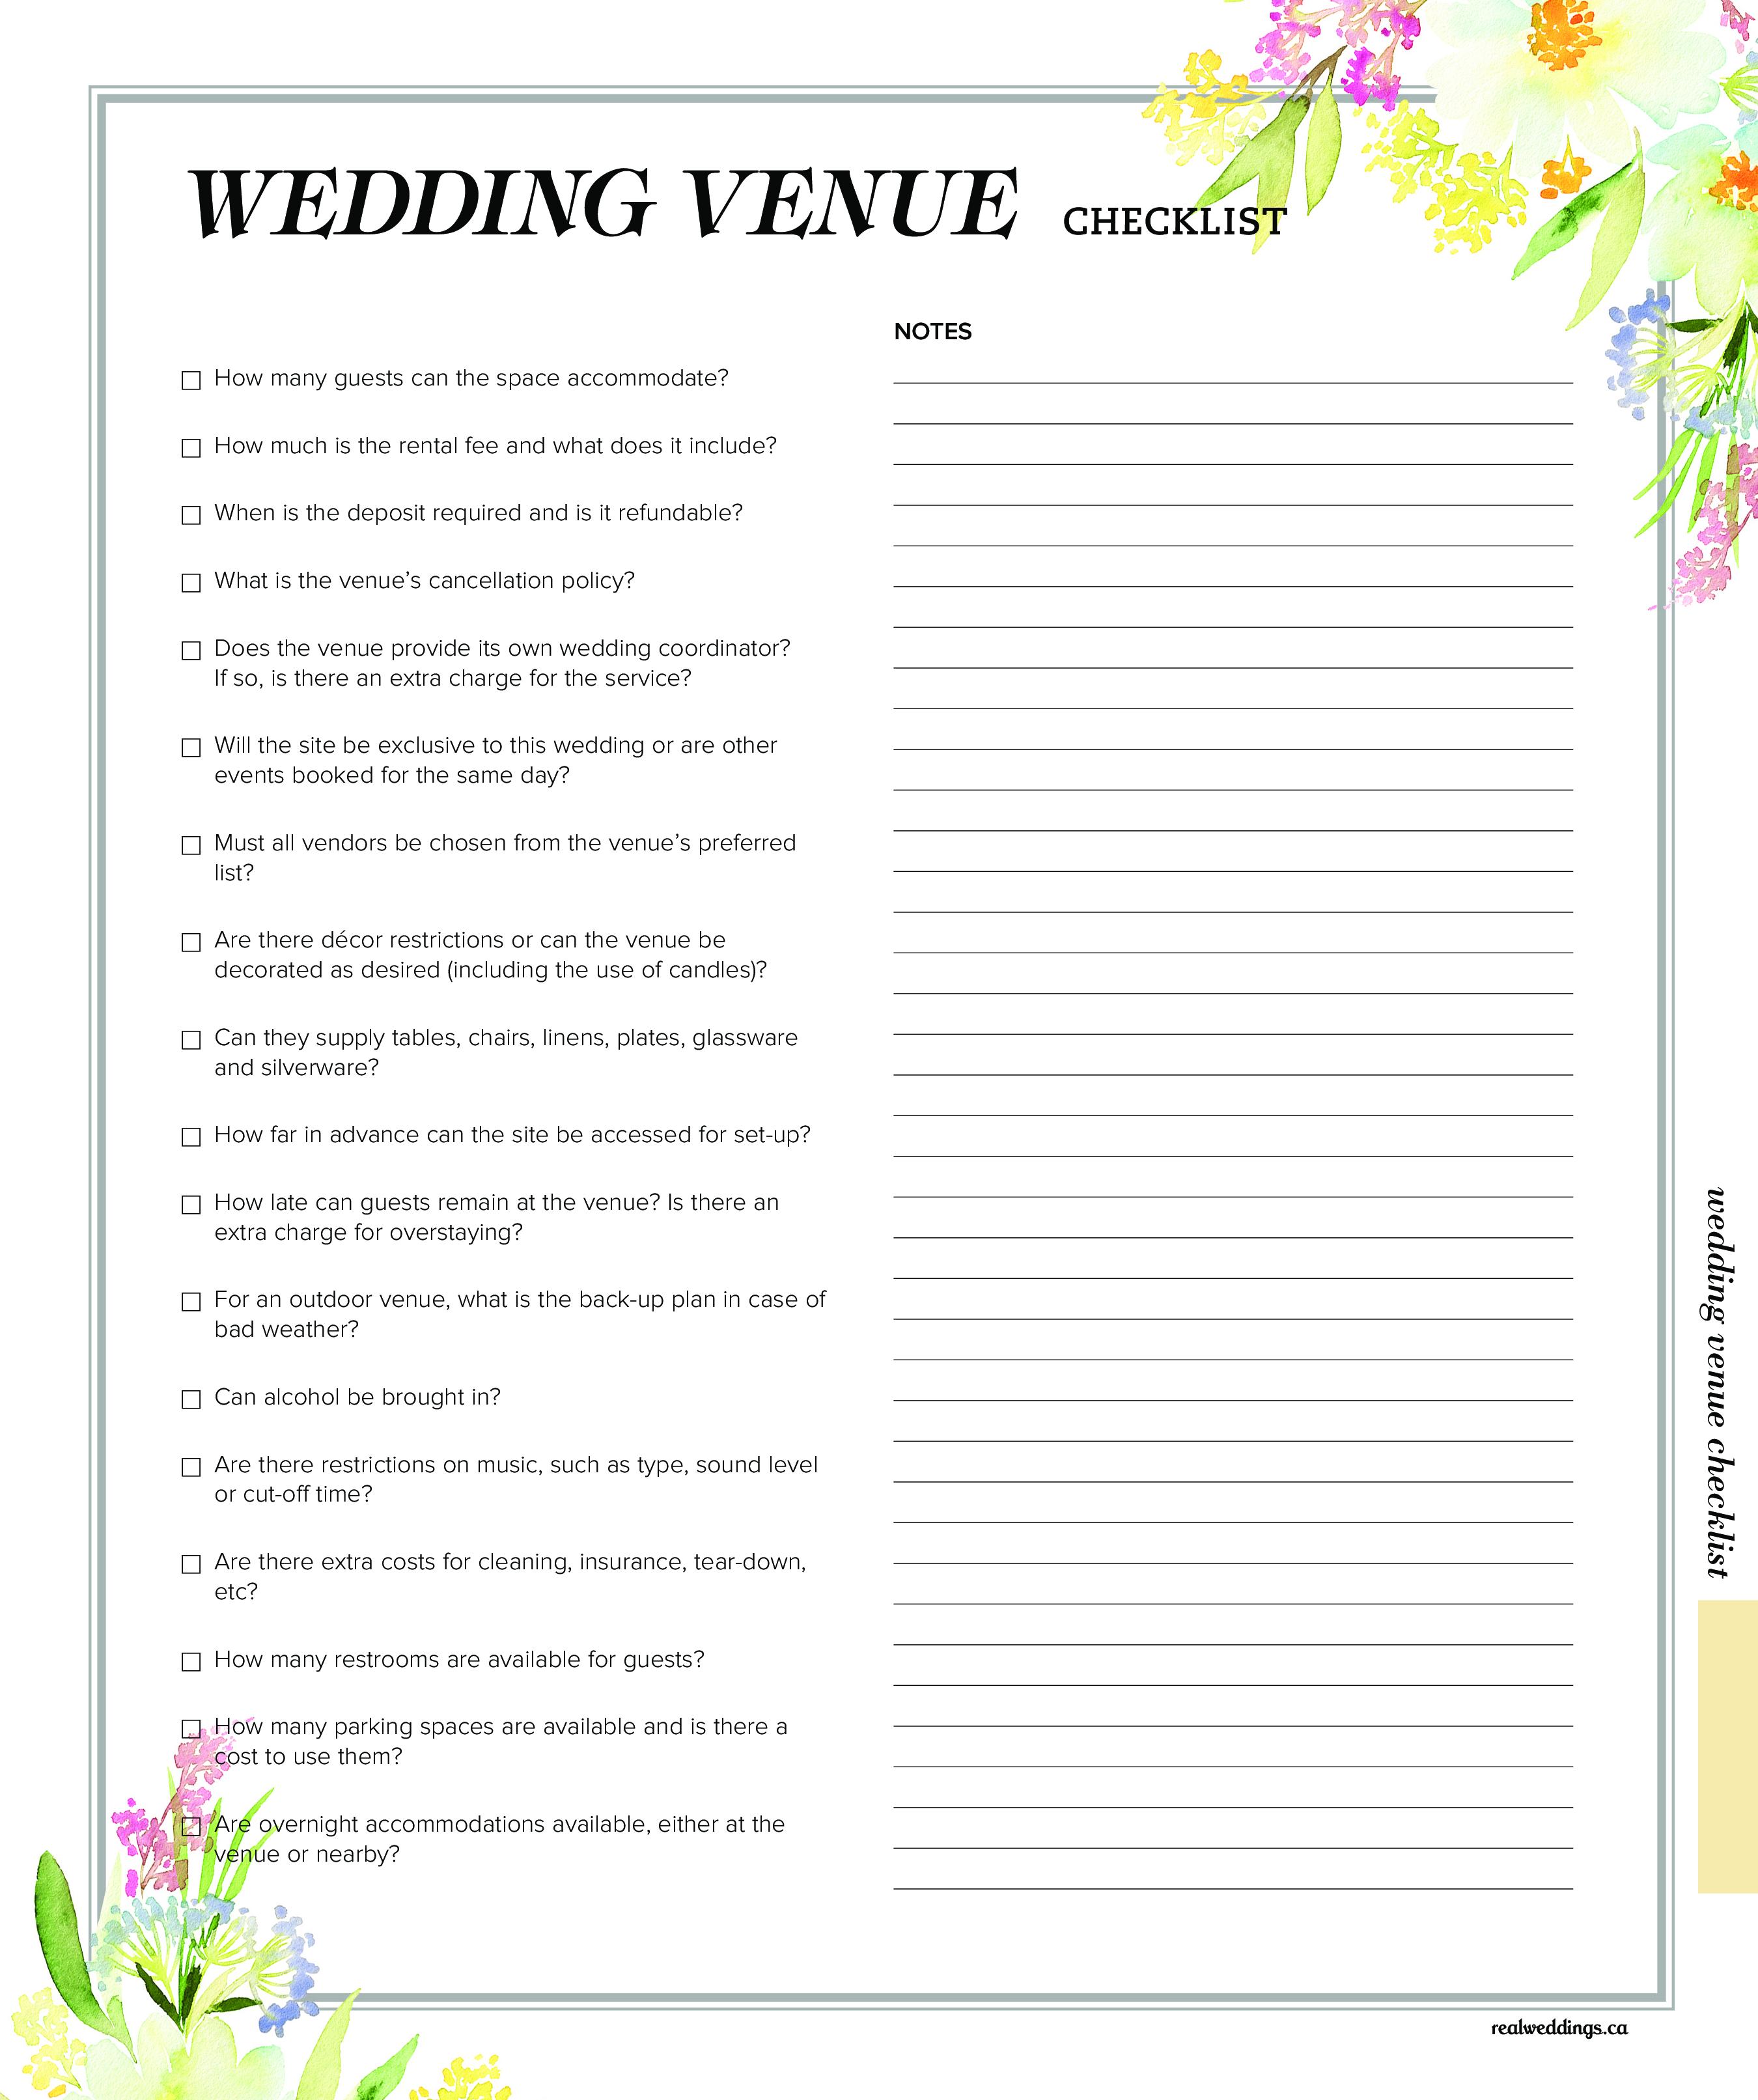 Wedding Venue Checklist  Templates at allbusinesstemplates.com Intended For Wedding Venue Business Plan Template